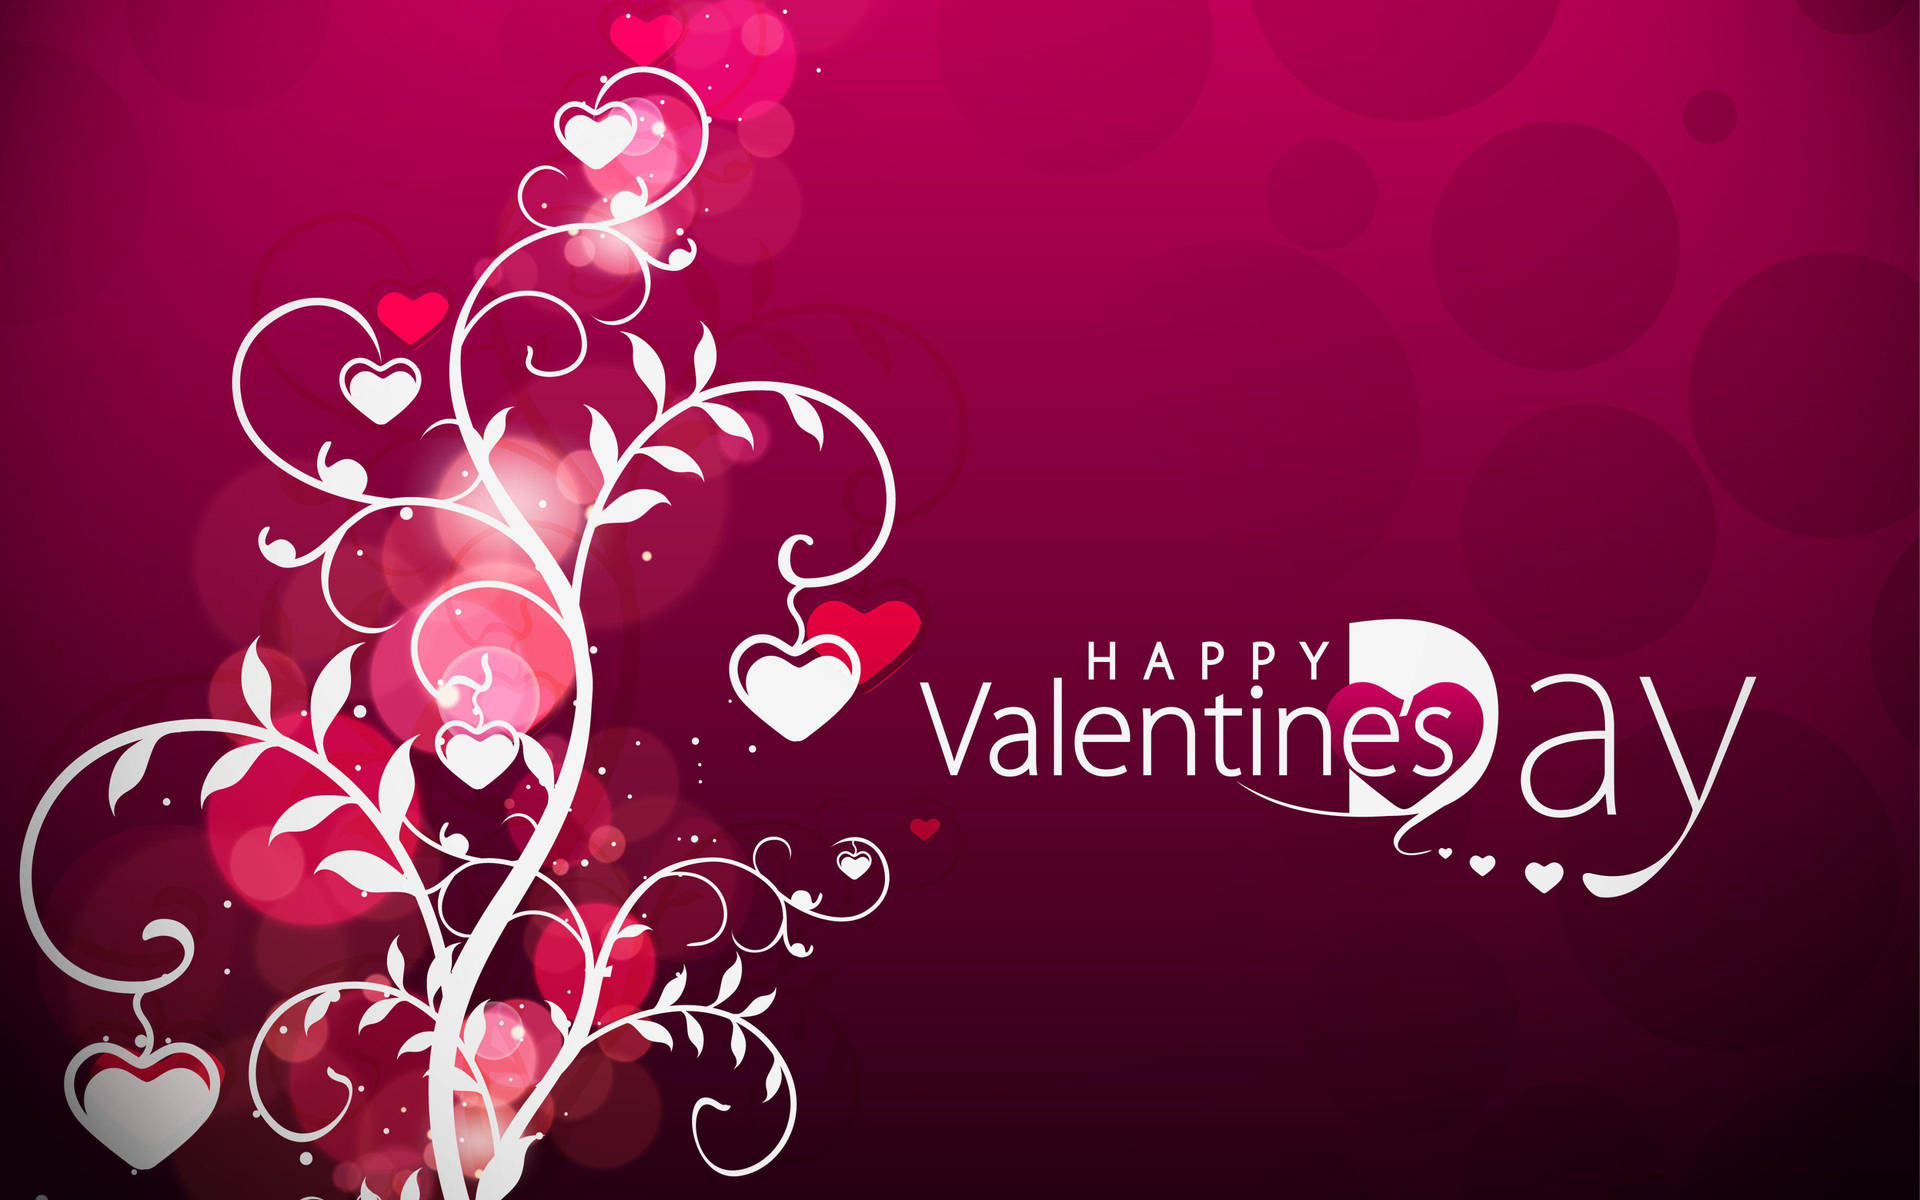 Free Valentines Wallpaper Downloads, Valentines Wallpaper for FREE